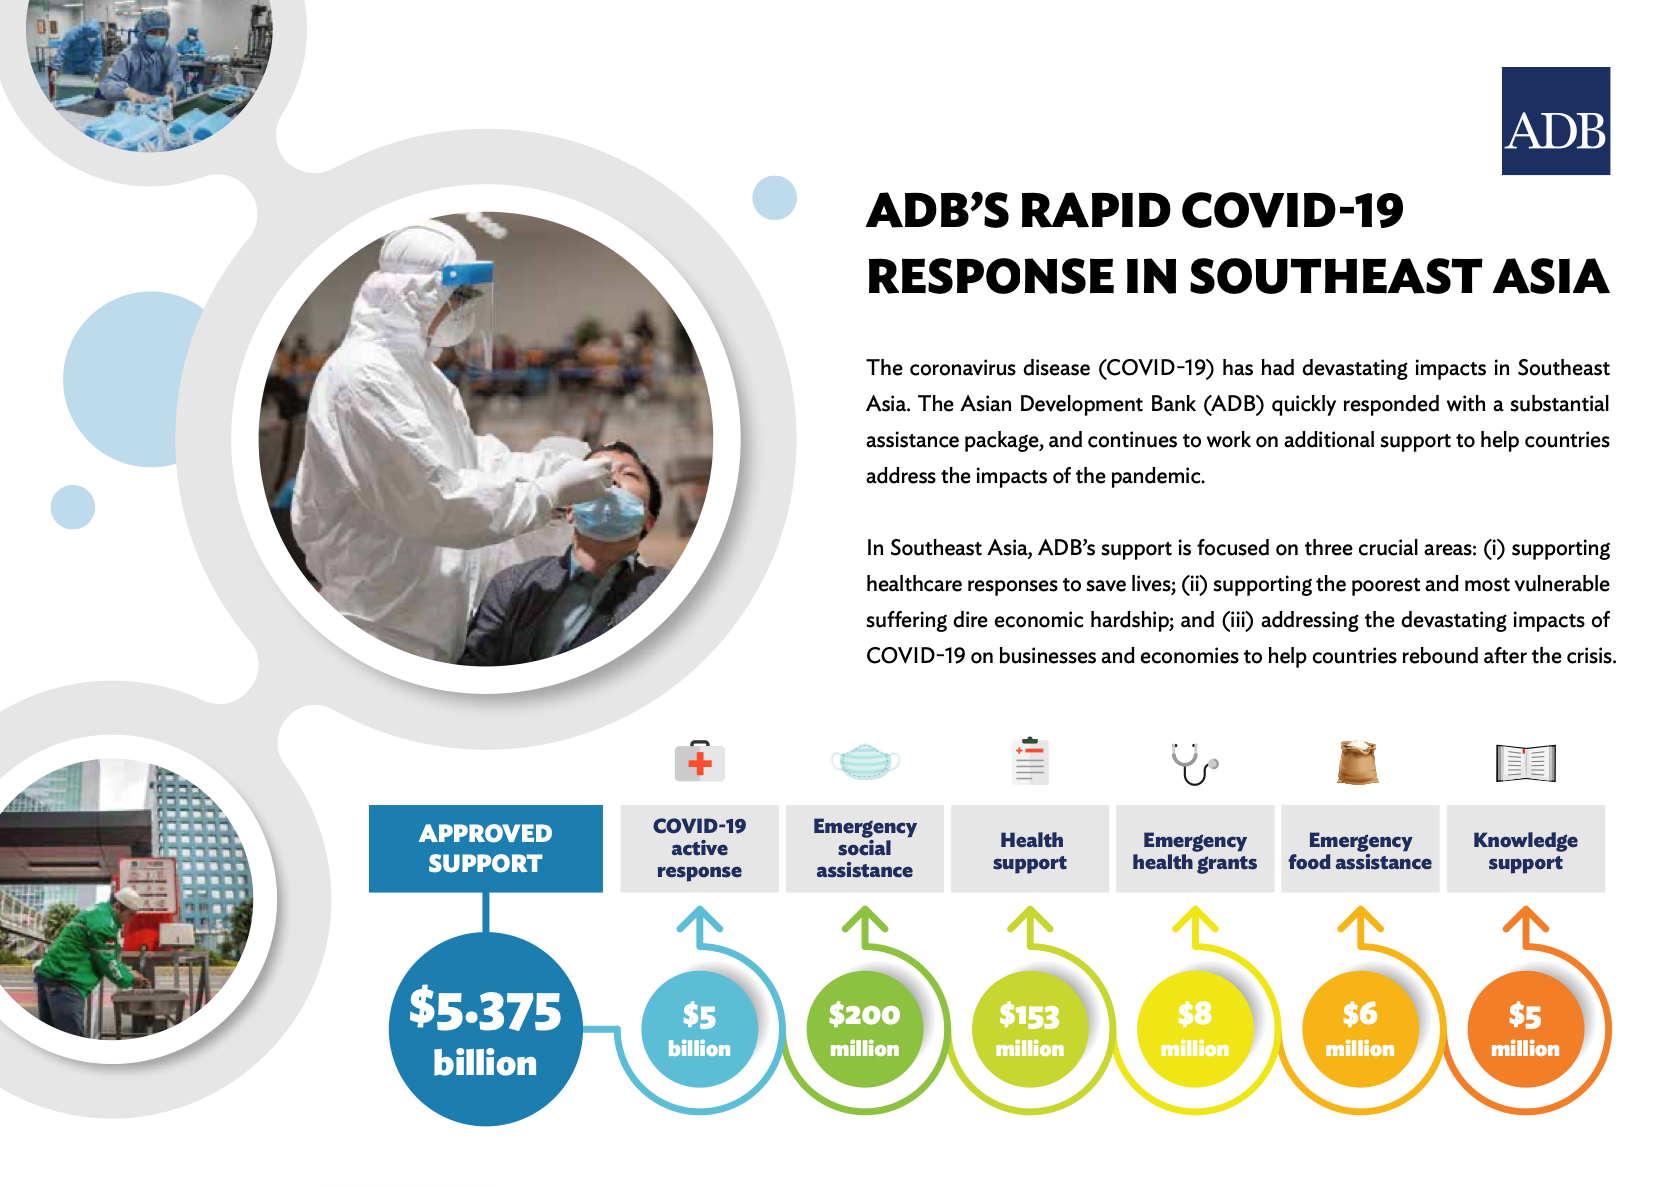 ADB’s Rapid COVID-19 Response in Southeast Asia cover.